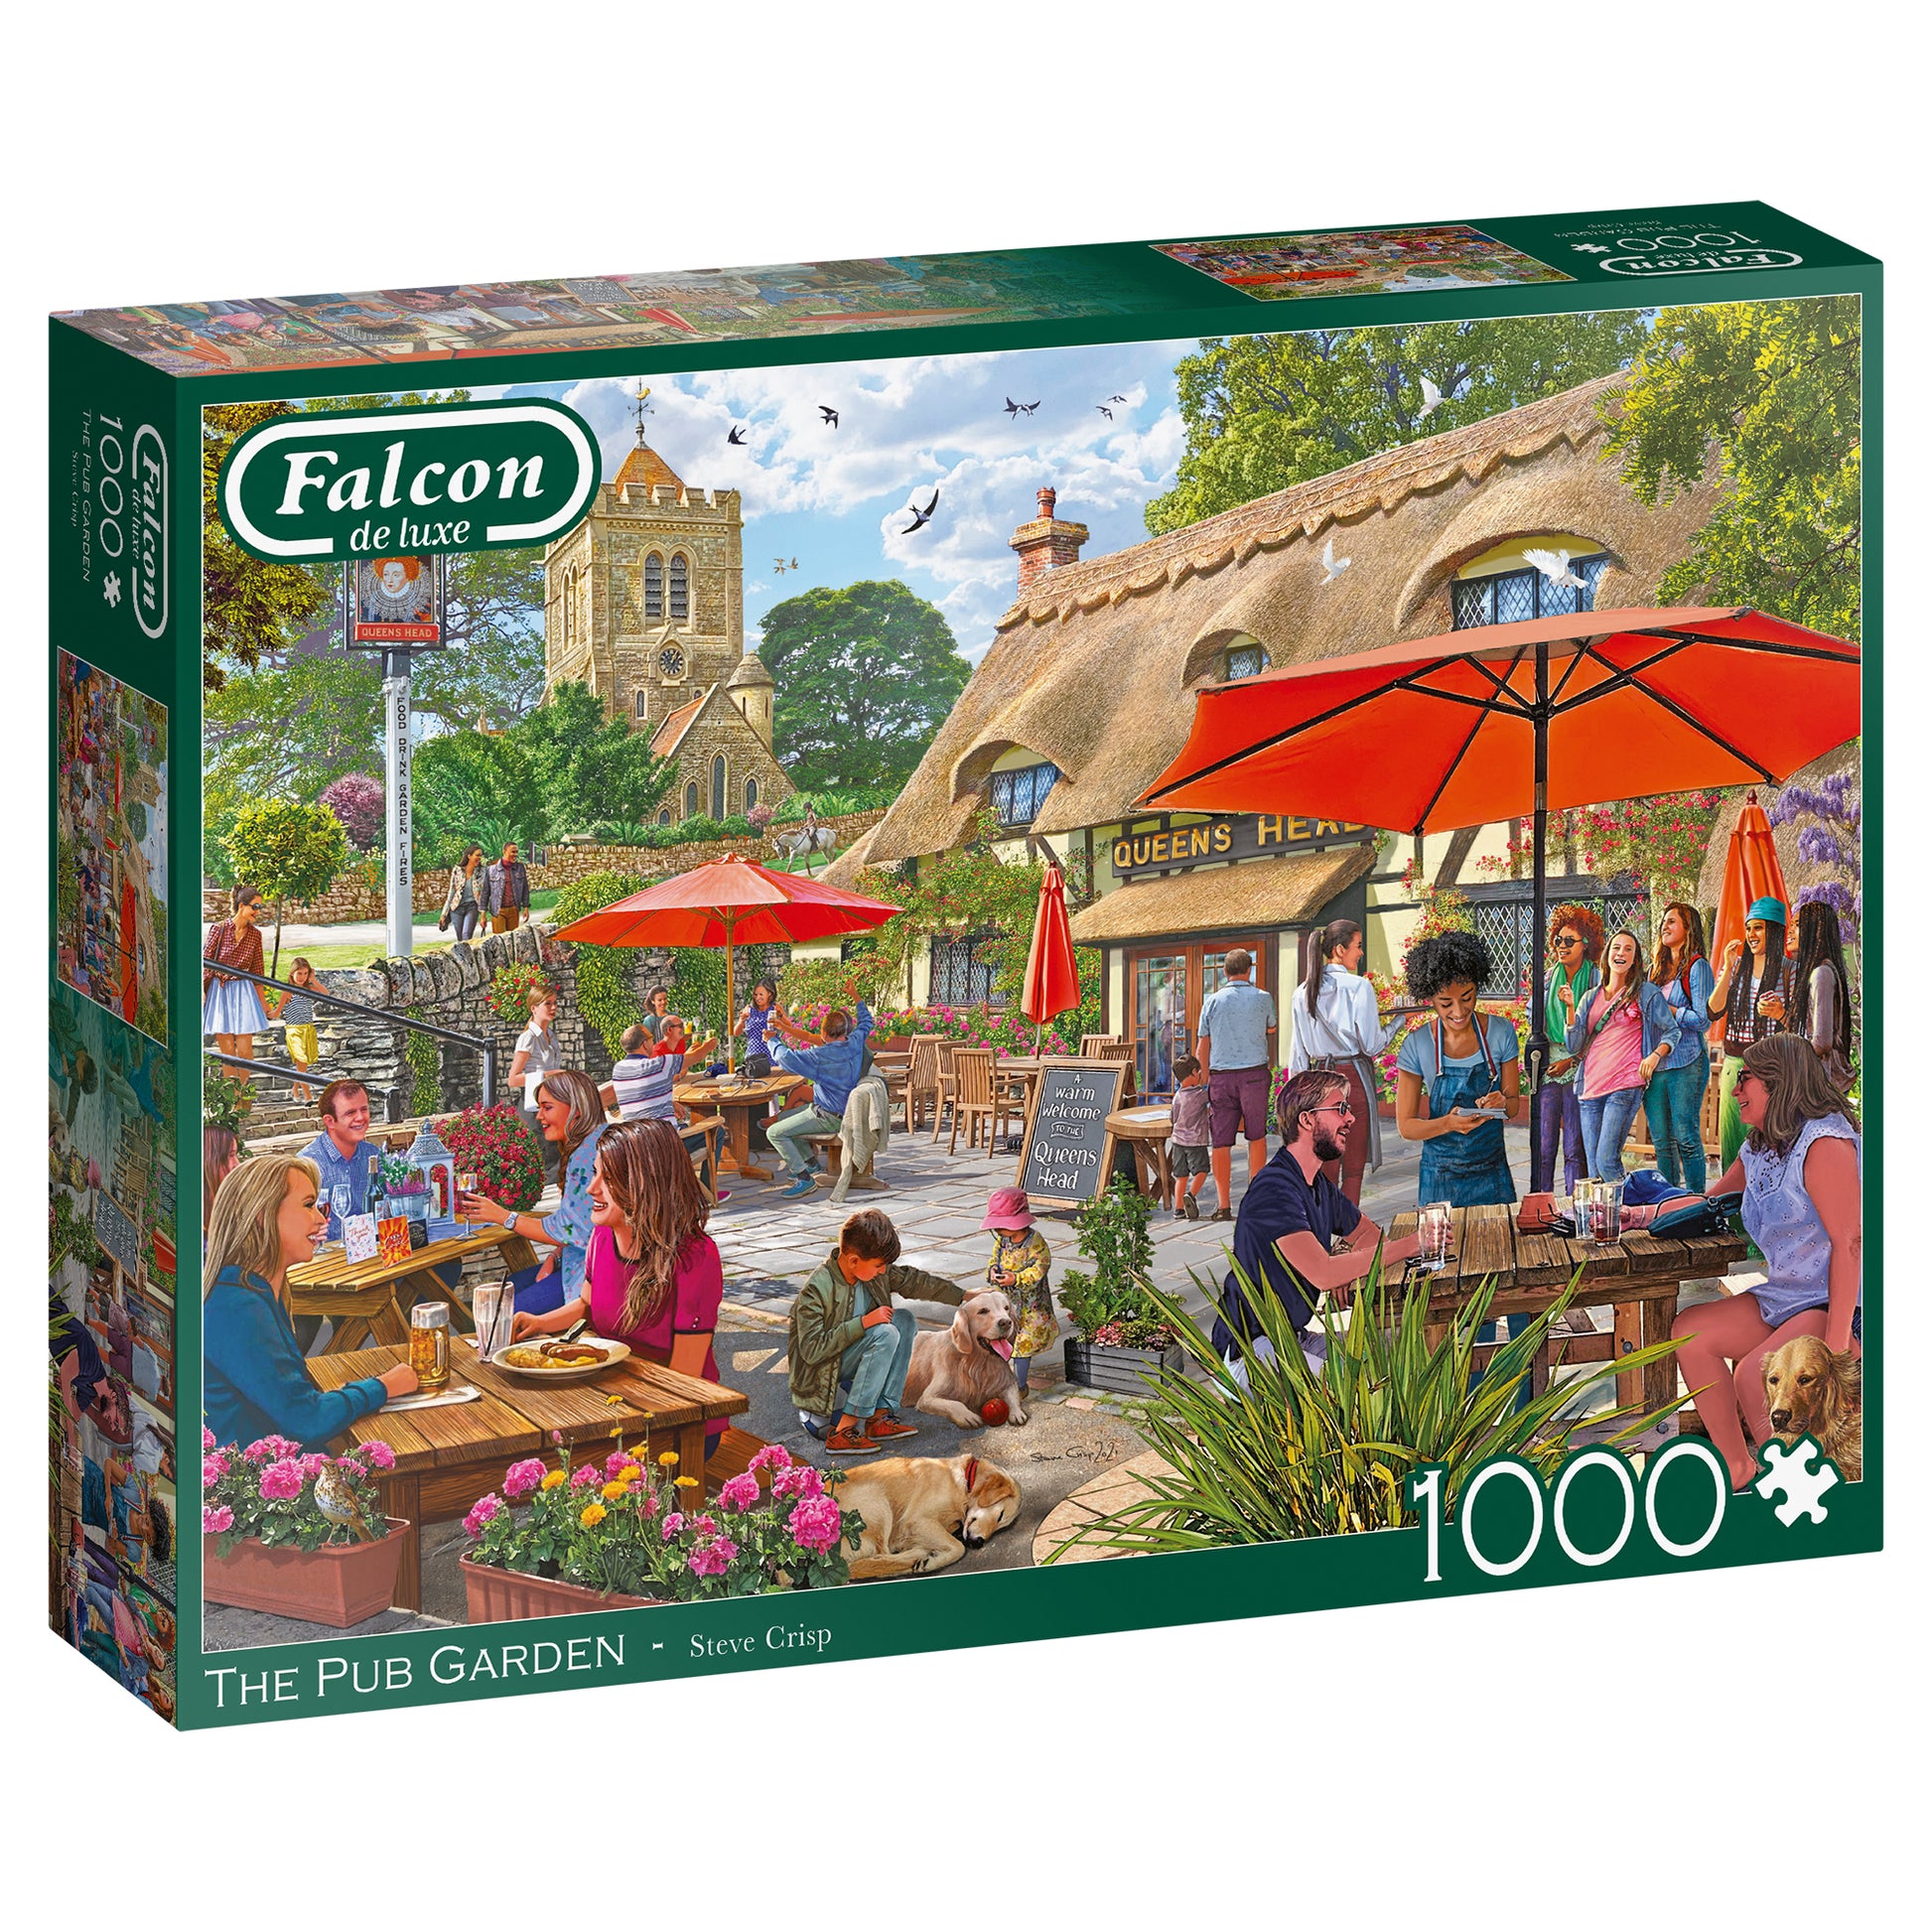 Falcon - The Pub Garden (1000 pieces) - product image - Jumboplay.com